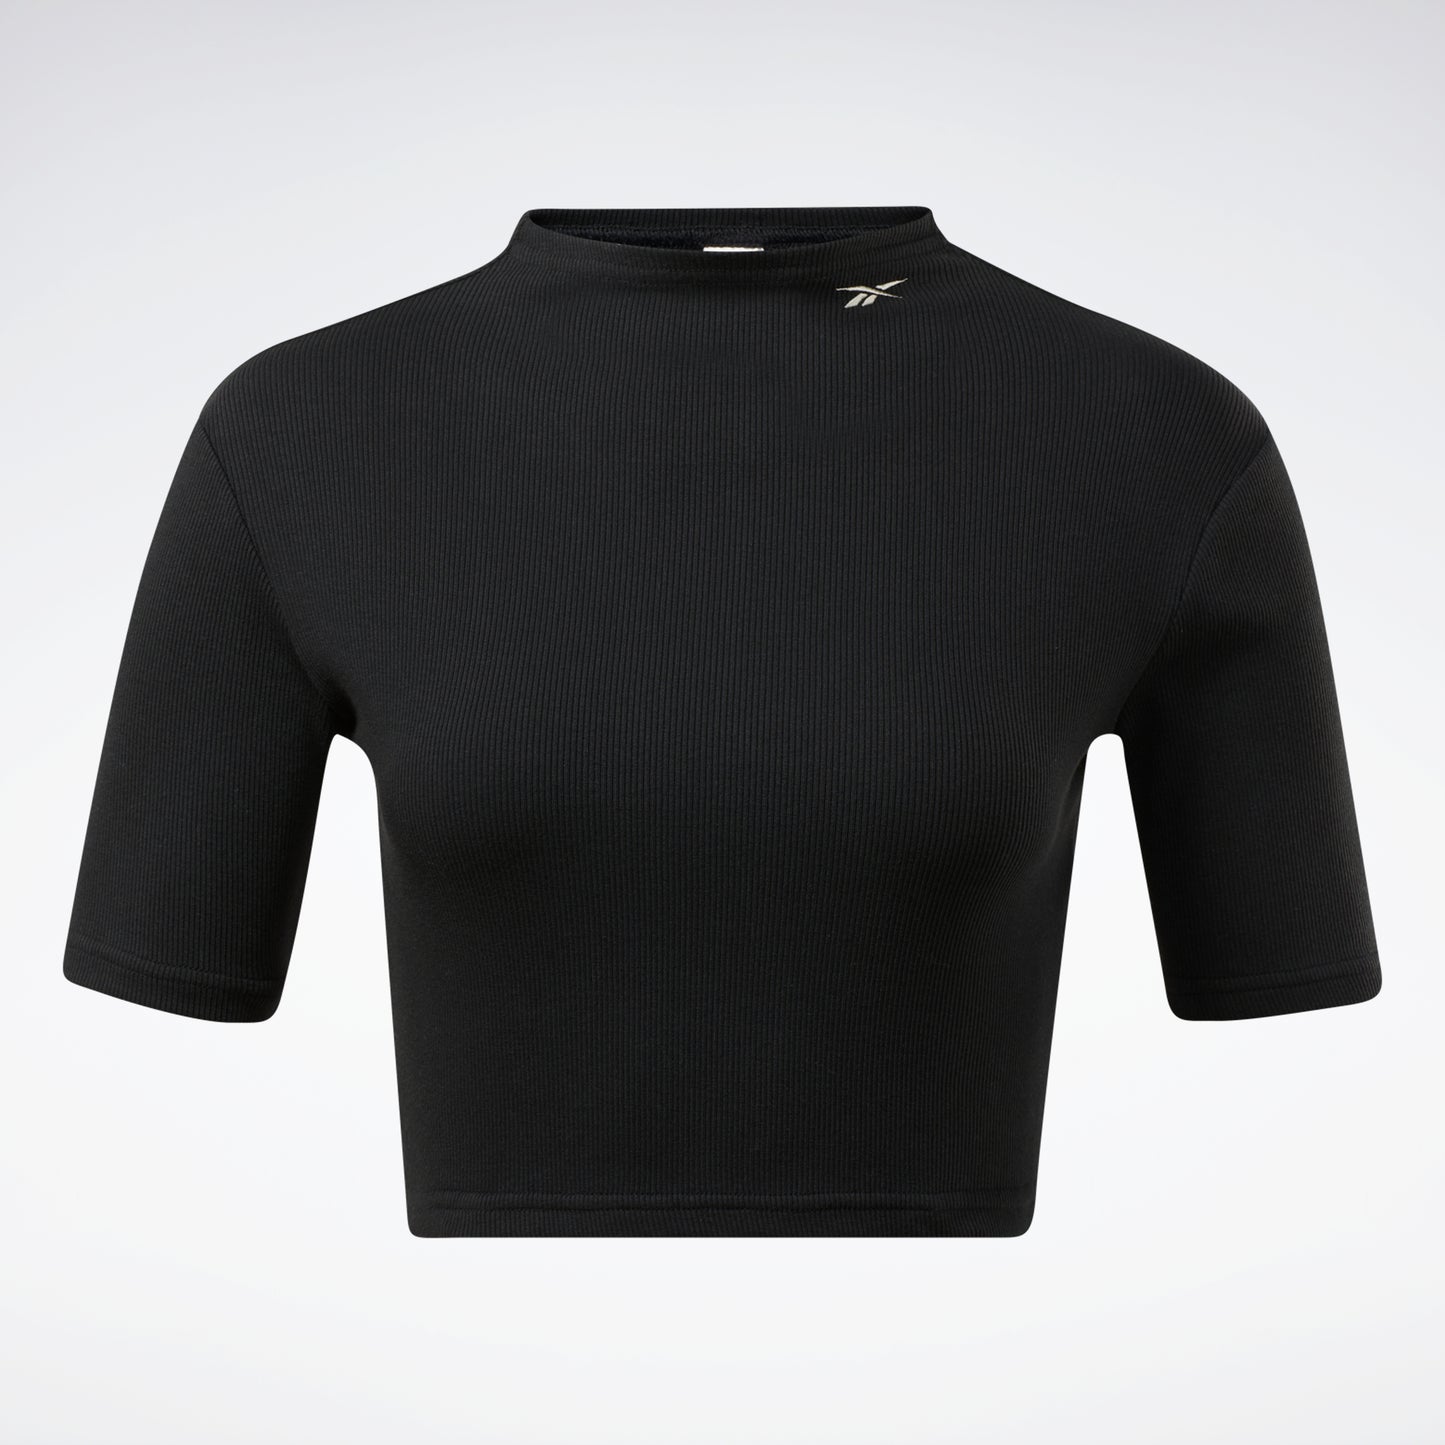 Reebok Apparel Women Short Sleeve Rib Tight Shirt Black